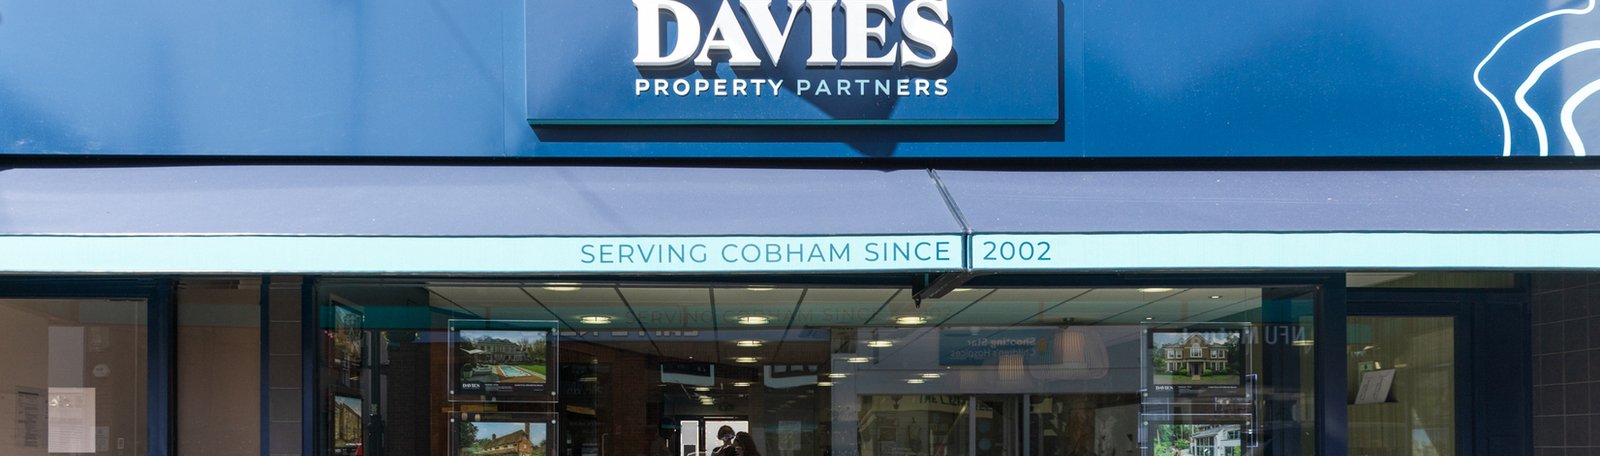 Davies Property Partners Cobham Estate Agents Office front